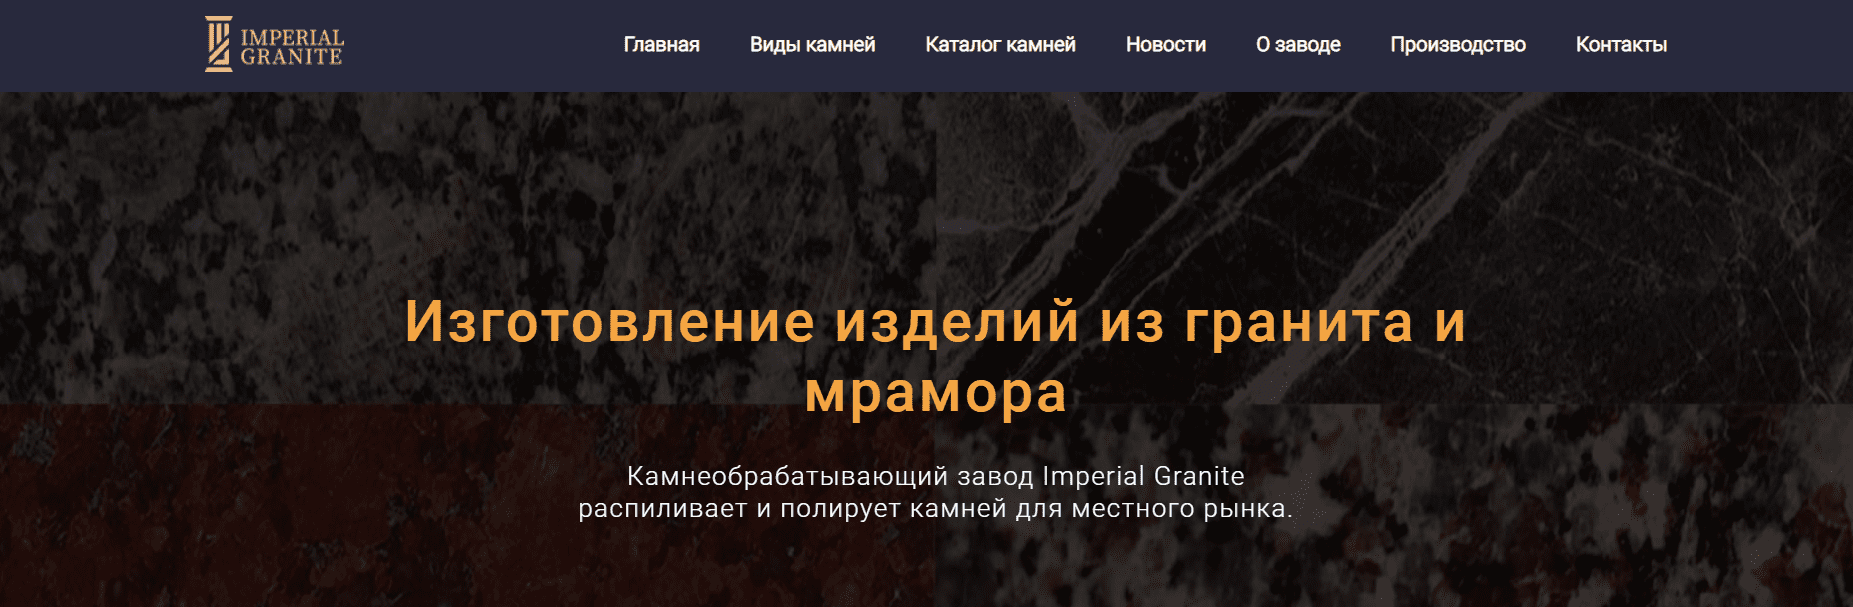 Imperial Granite (imperialgranite.uz) - официальный сайт